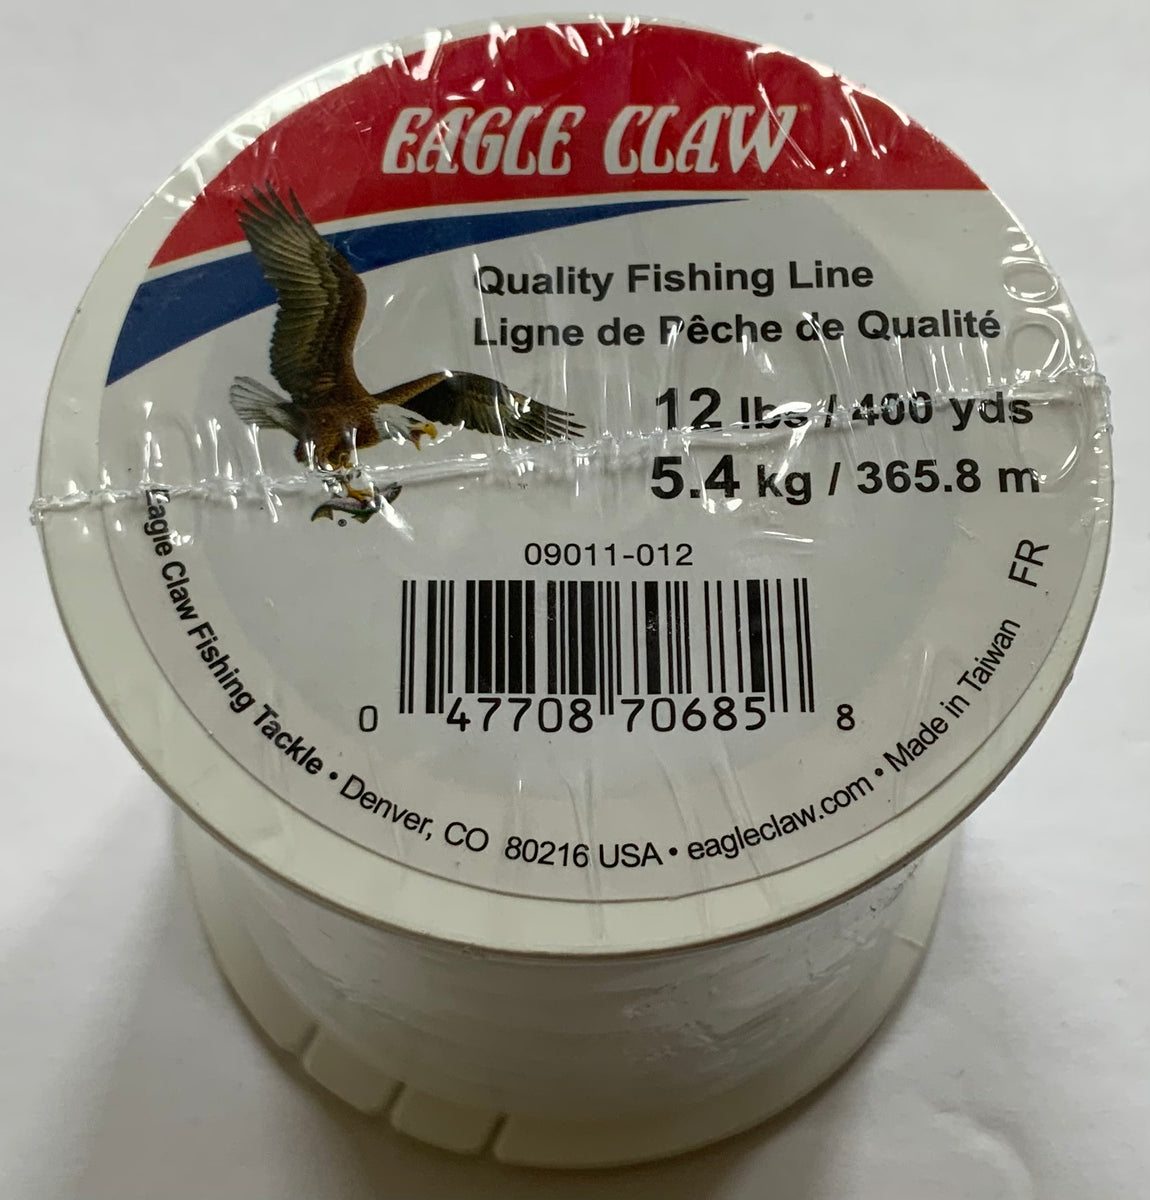 CLEAR Mono Premium Eagle Claw Fishing Line 6 Pound Test 1900yds AR358